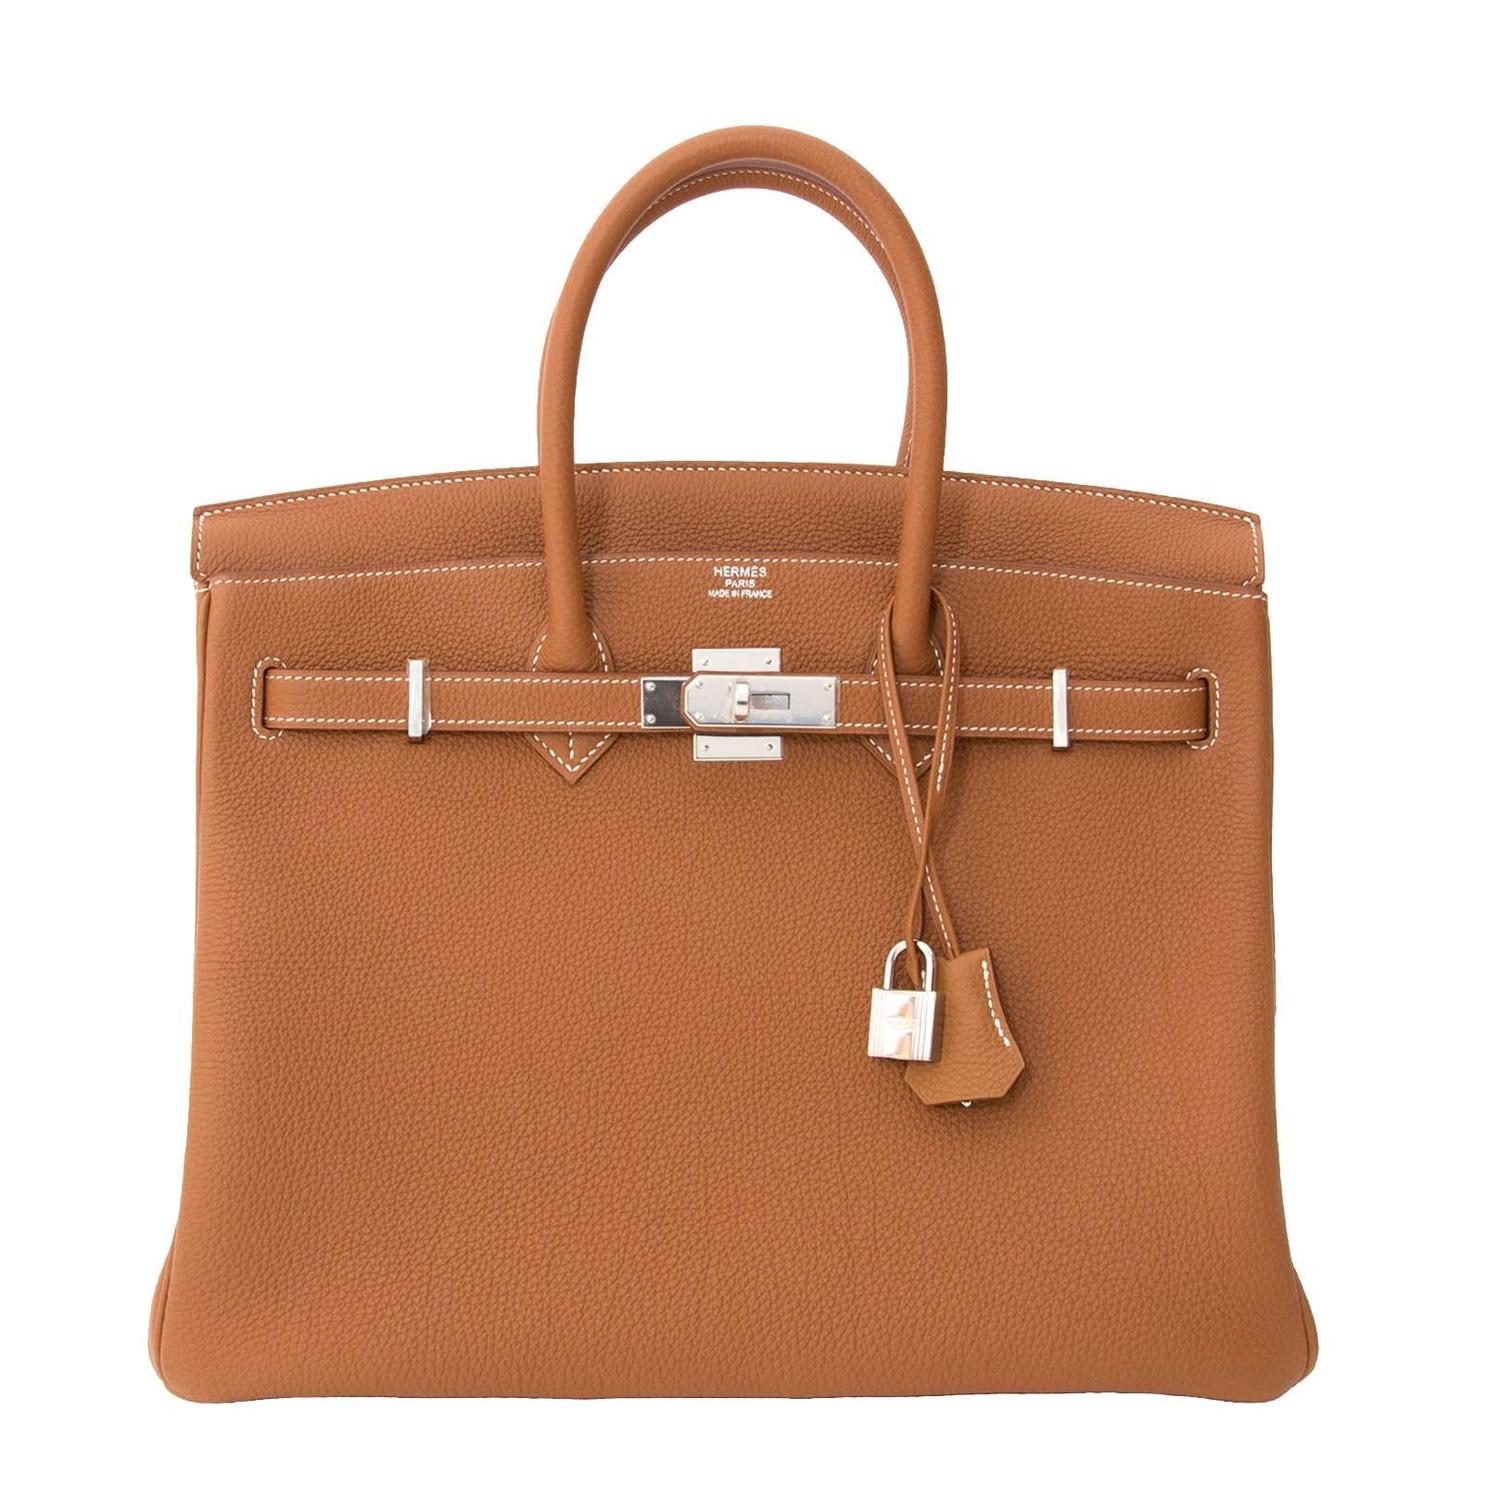 BRAND NEW Hermès Birkin Bag 35 PHW Togo Gold at 1stdibs